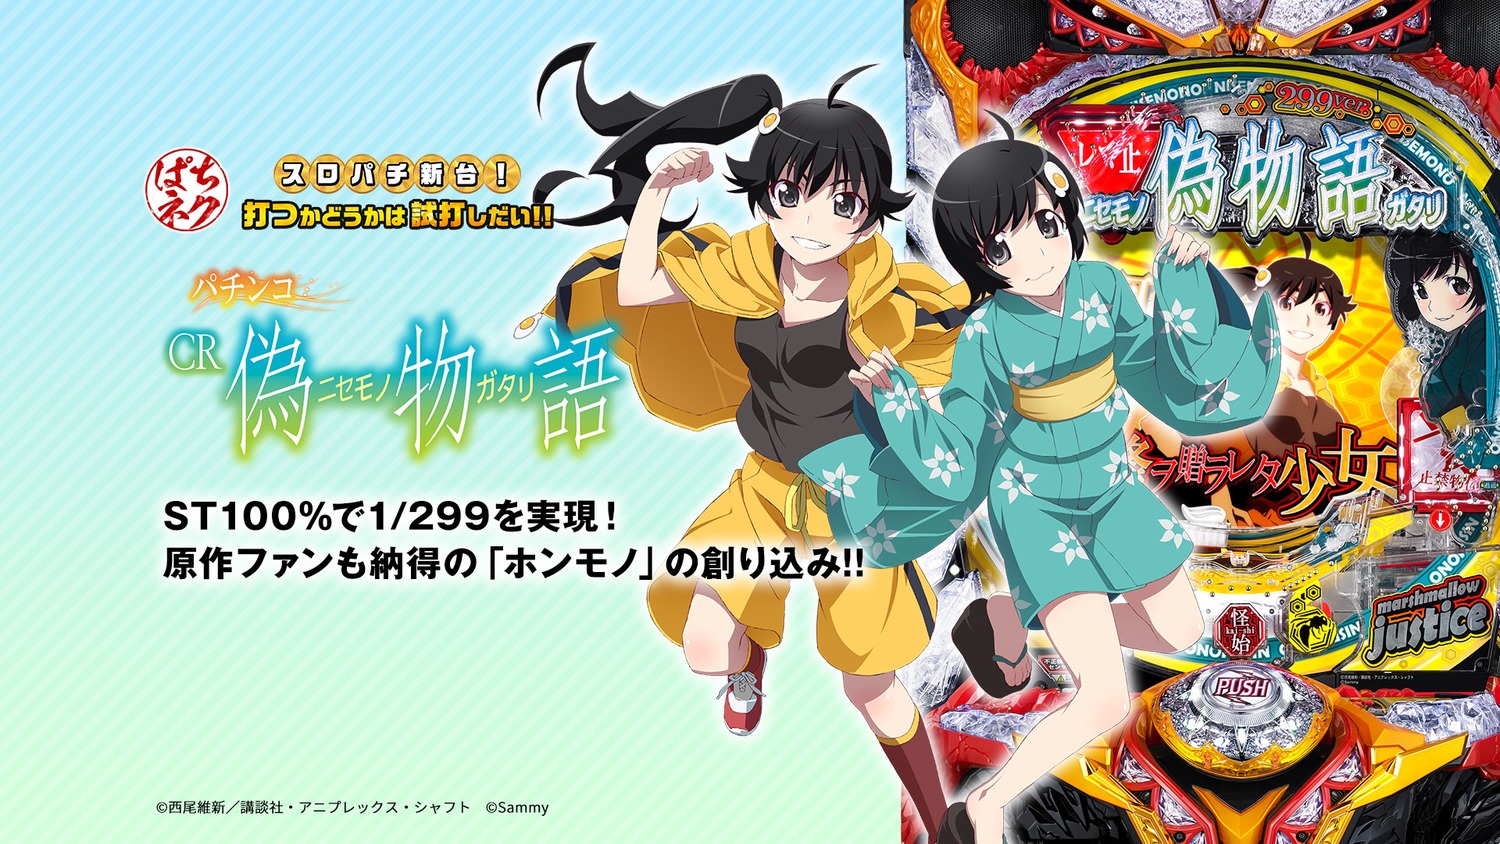 Araragi Karen Araragi Tsukihi Bakemonogatari Gym Uniform - 偽 物語 , HD Wallpaper & Backgrounds